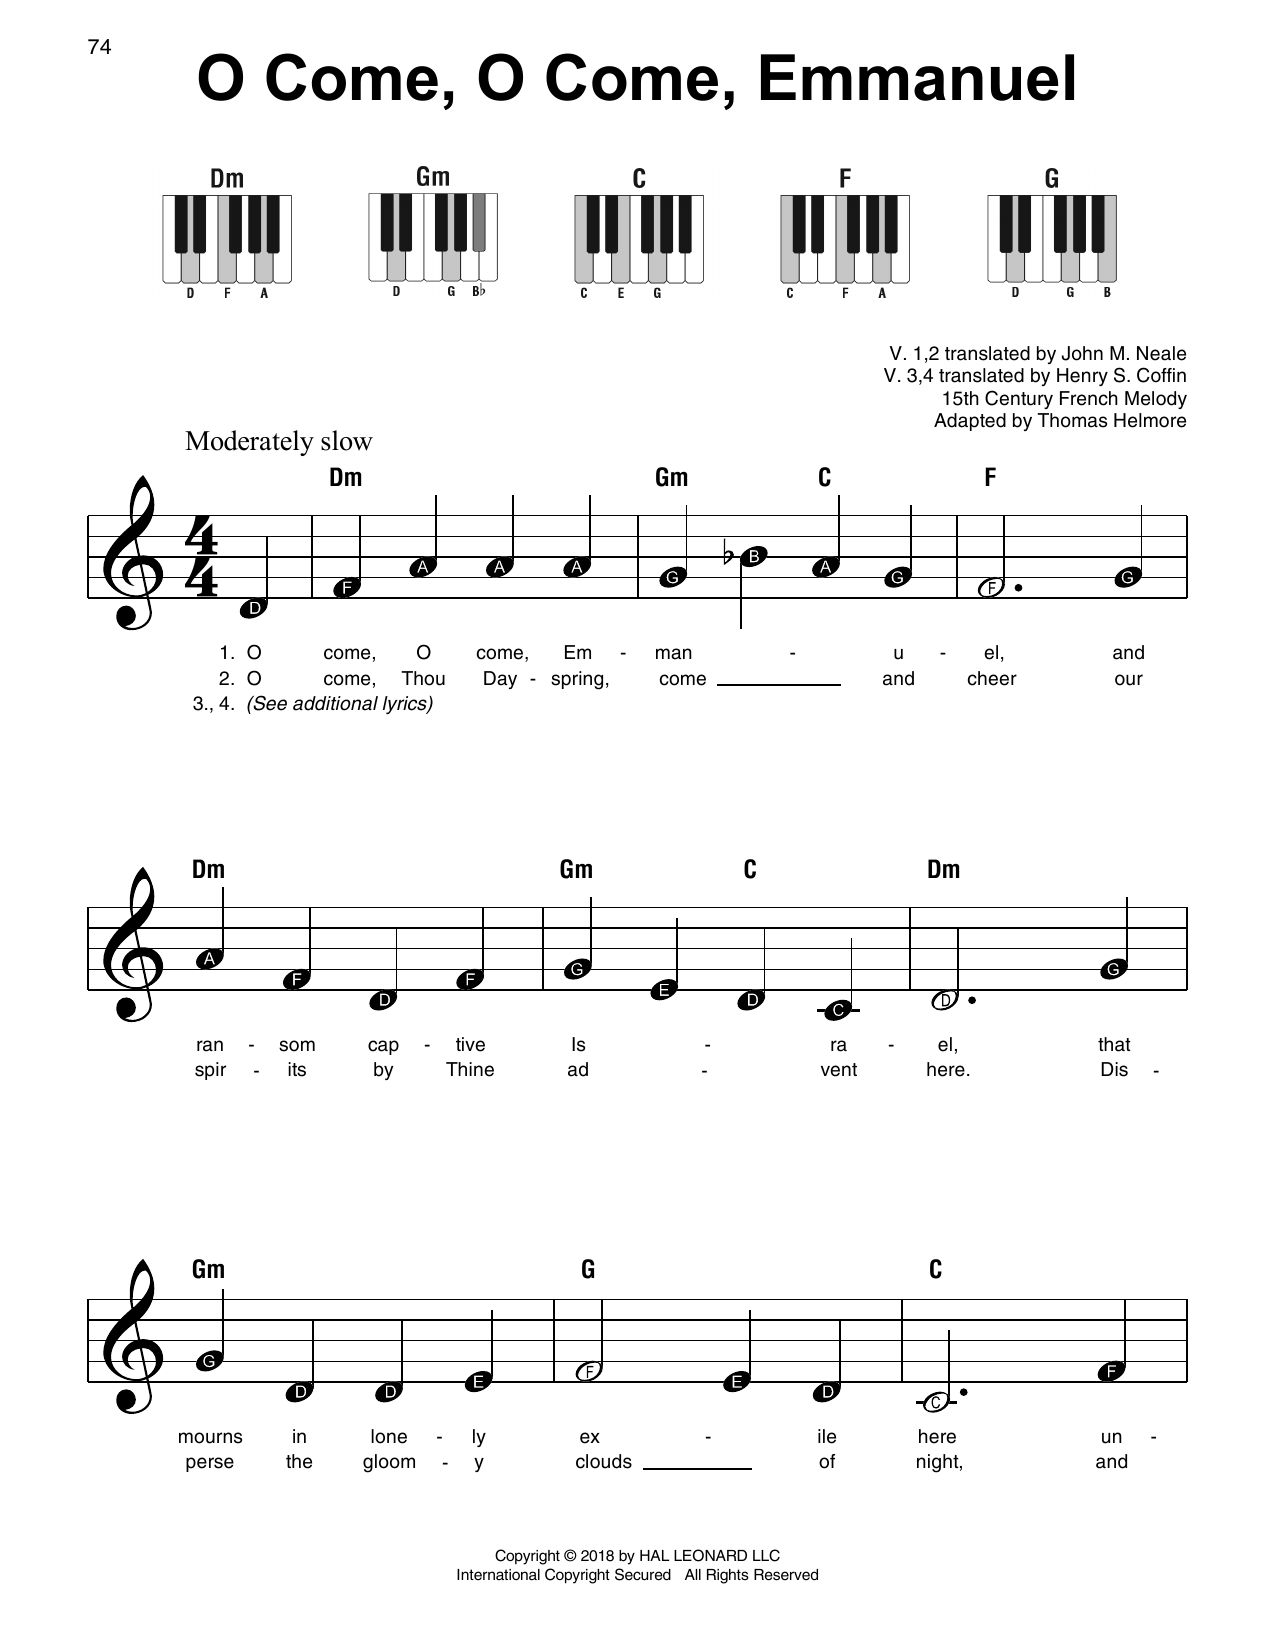 Christmas Carol O Come, O Come, Emmanuel sheet music notes and chords arranged for Violin and Piano